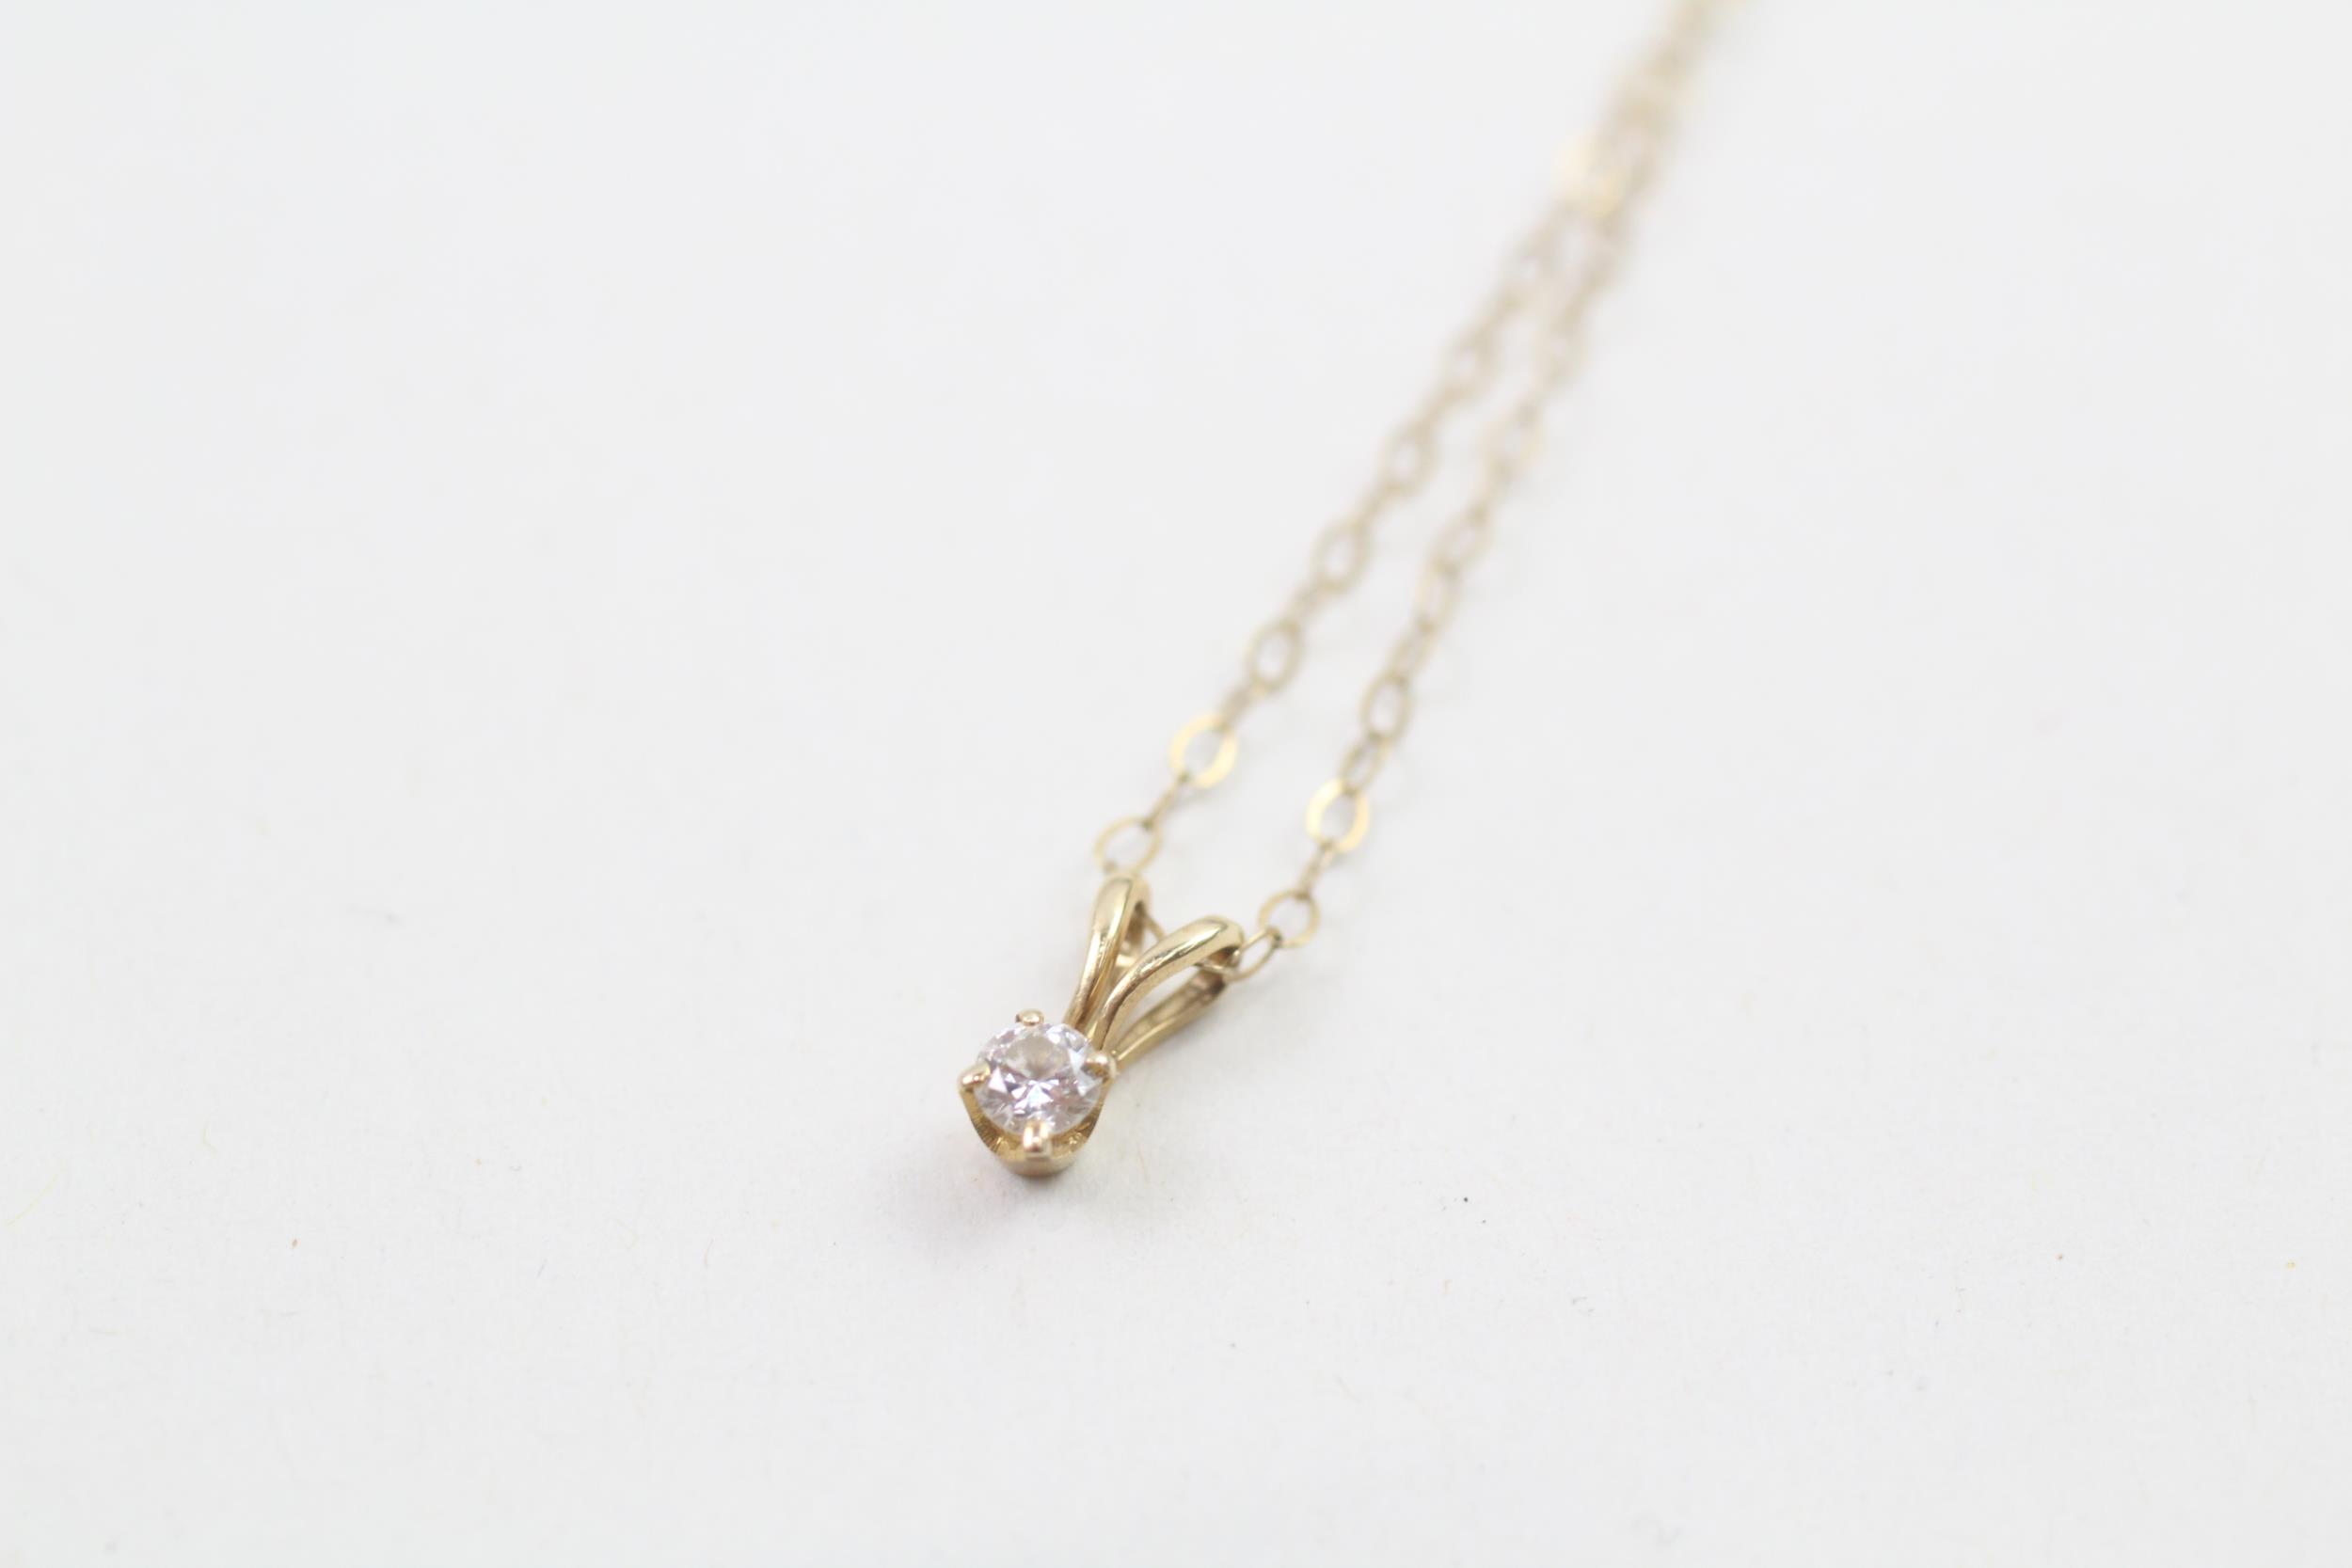 9ct gold round brilliant cut diamond pendant necklace (0.5g)